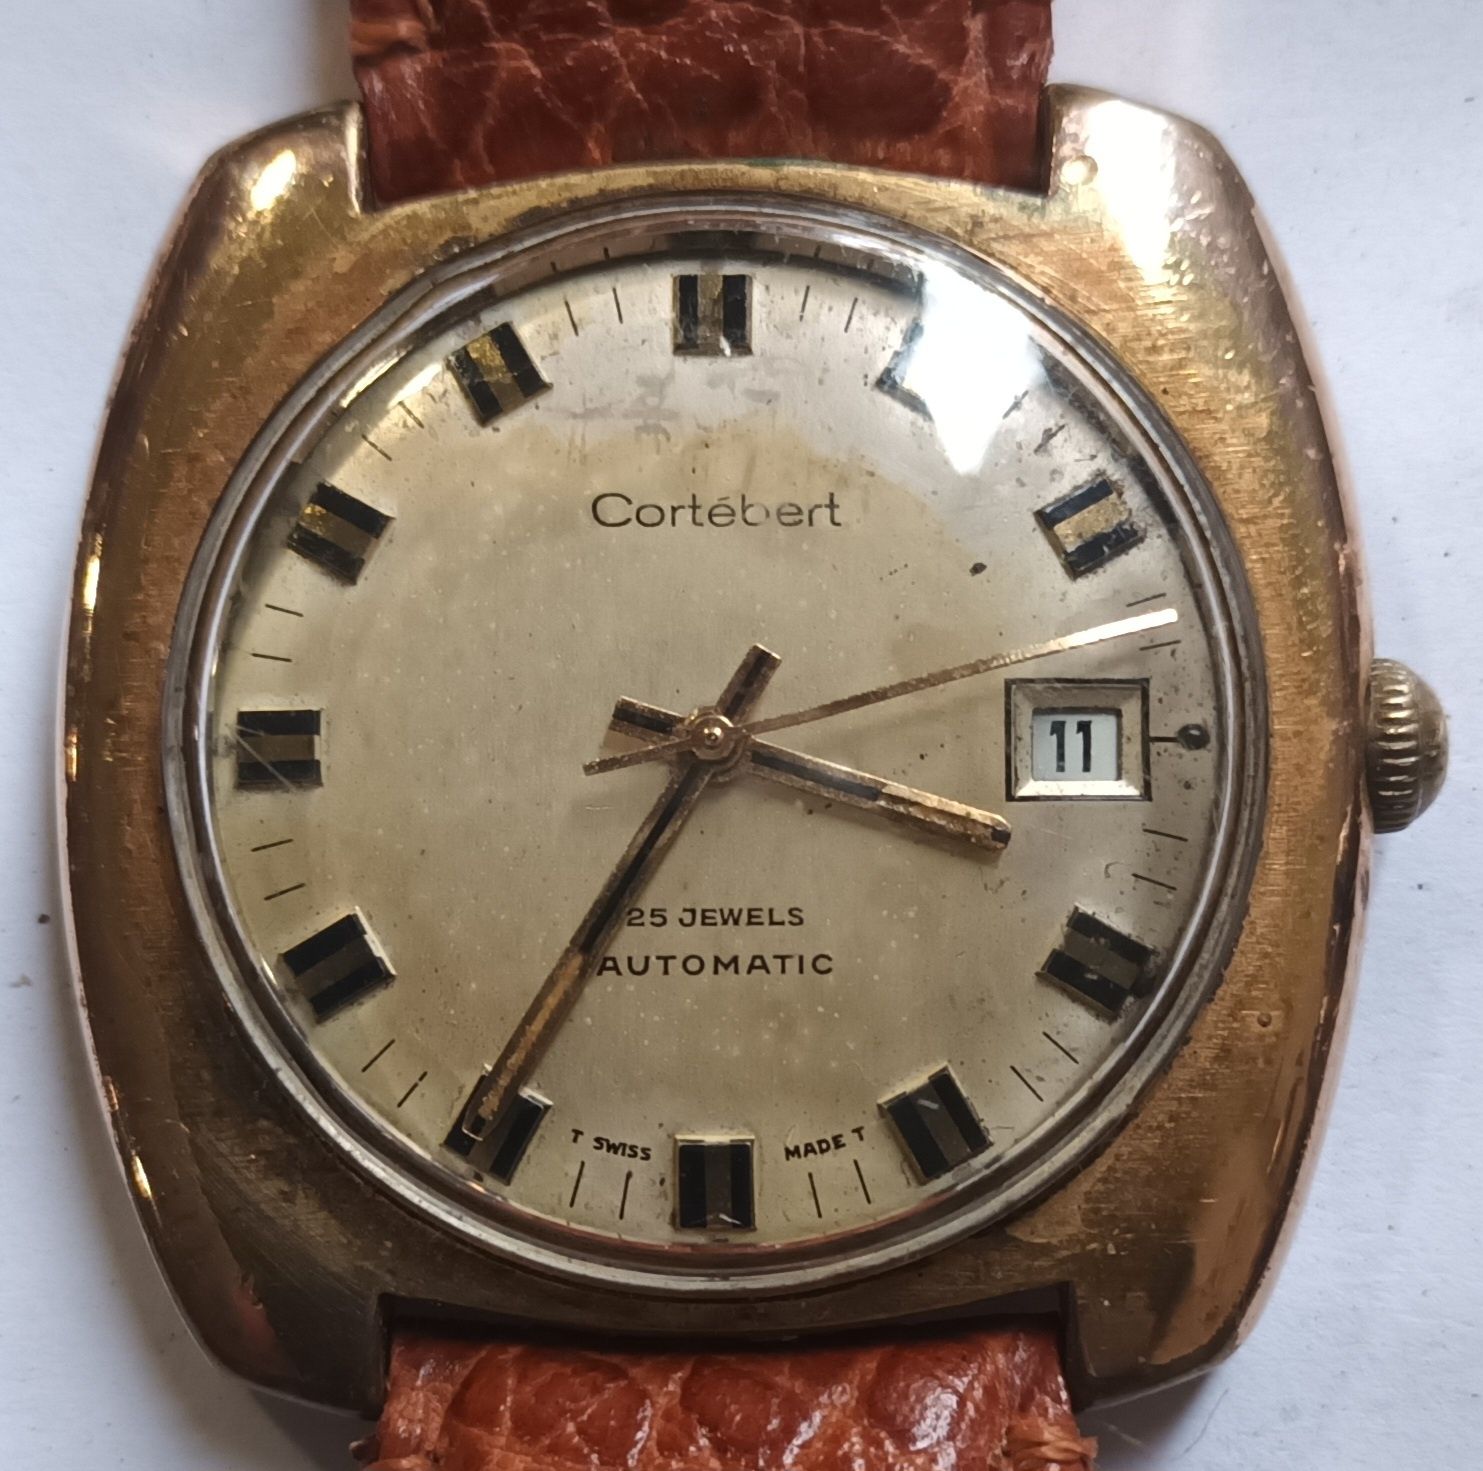 Relógio Cortebert antigo(+80anos) Automatic 25 Jewels Vintage